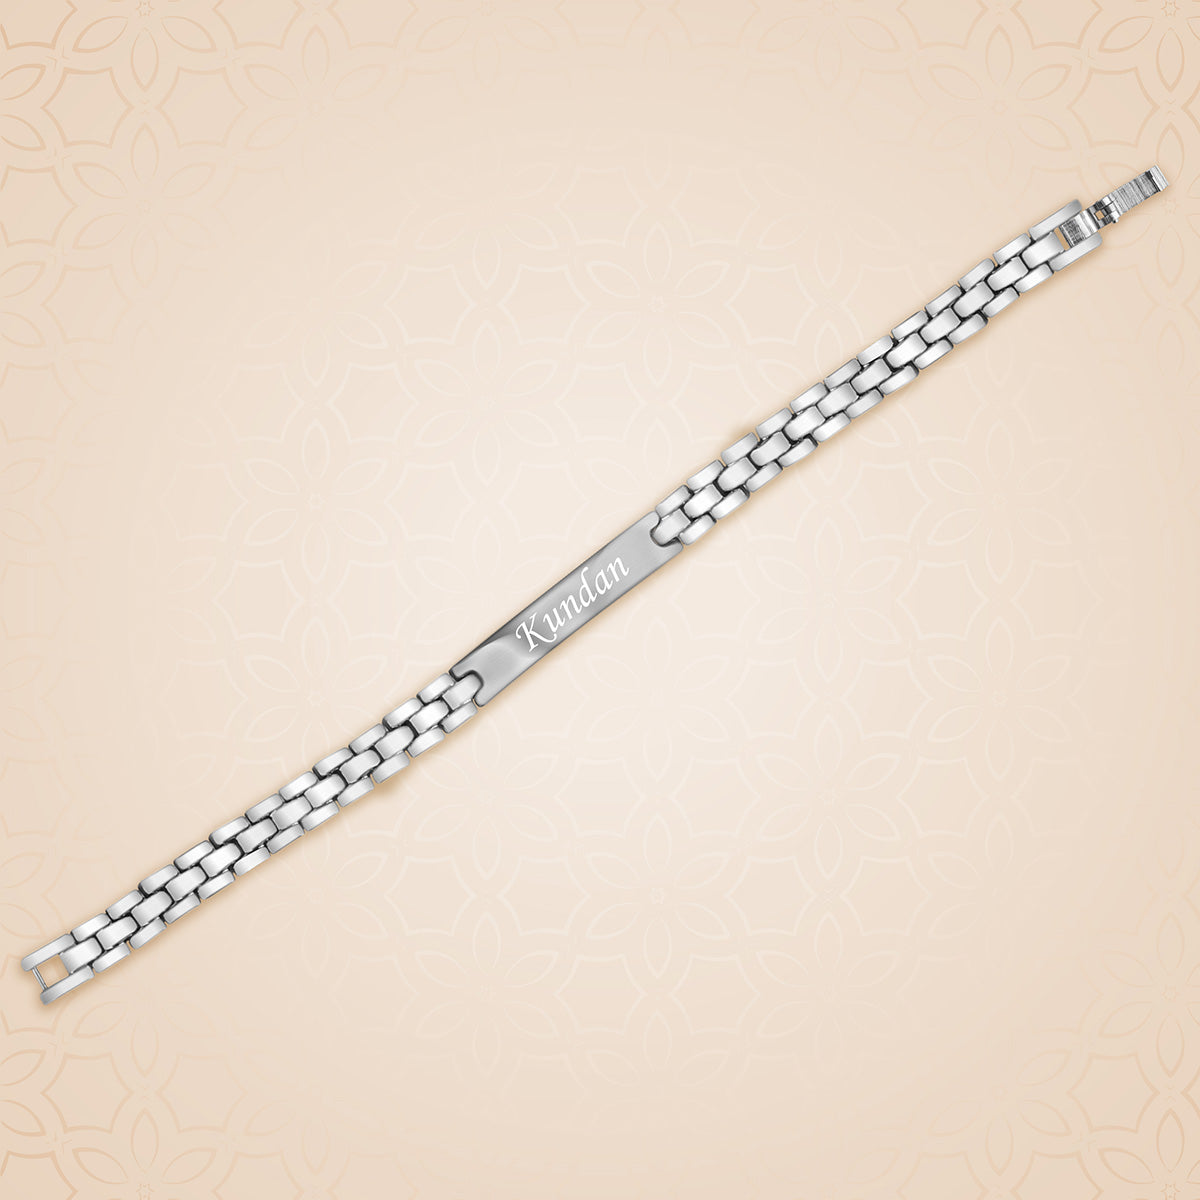 Personalized Silver Bracelet Style Rakhi With Name